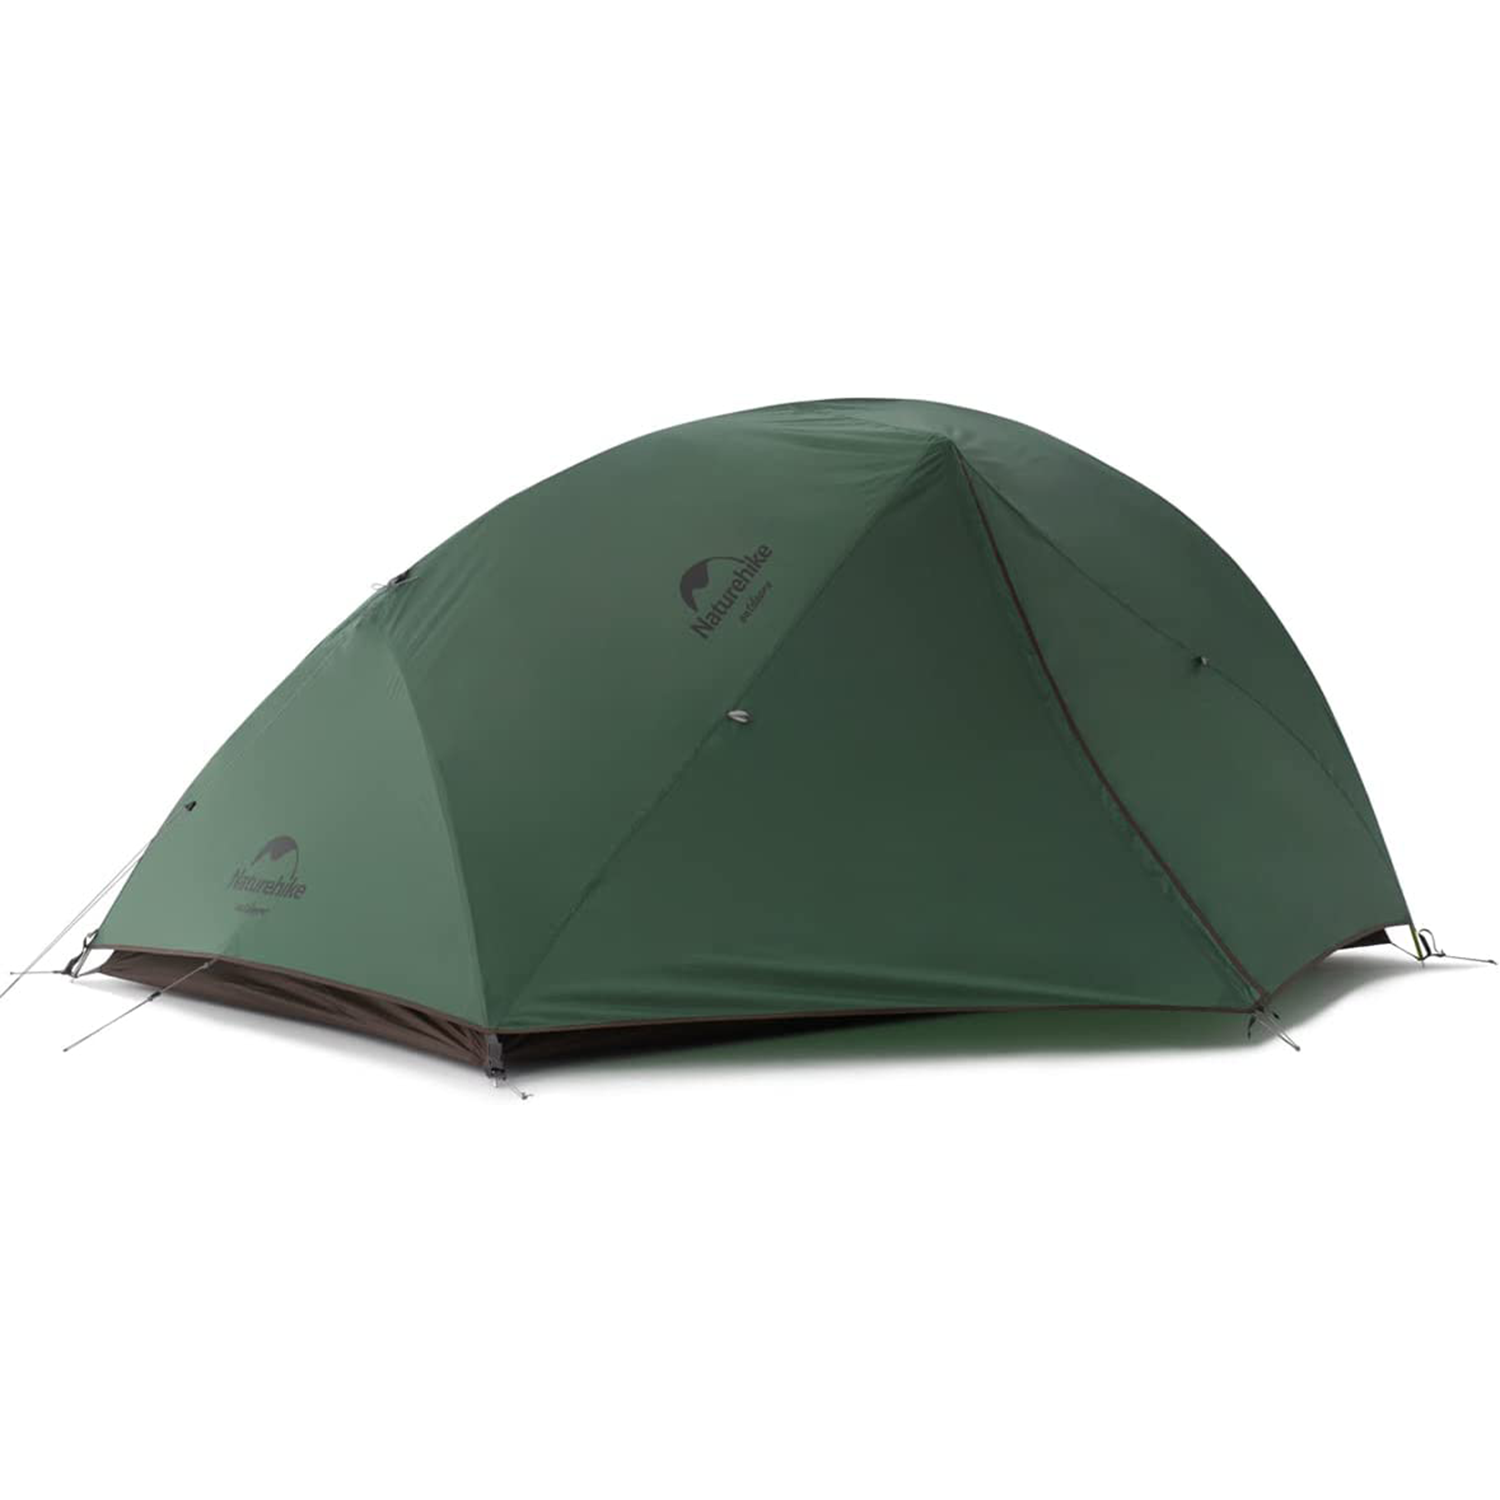 Naturehike公式ショップ テント 1人用 アウトドア 二重層 超軽量 4